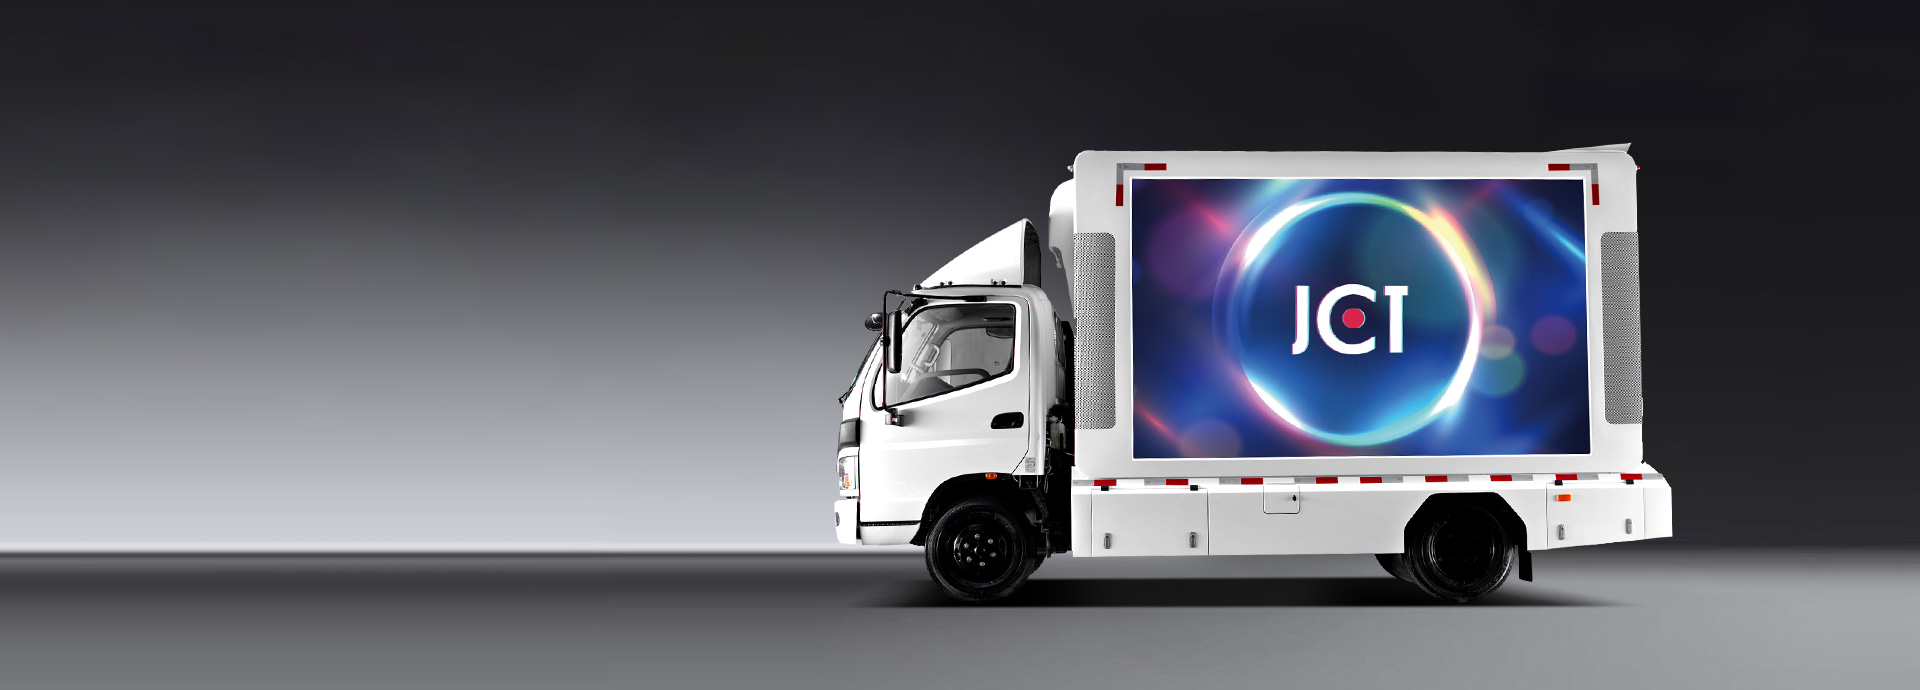 truck LED display